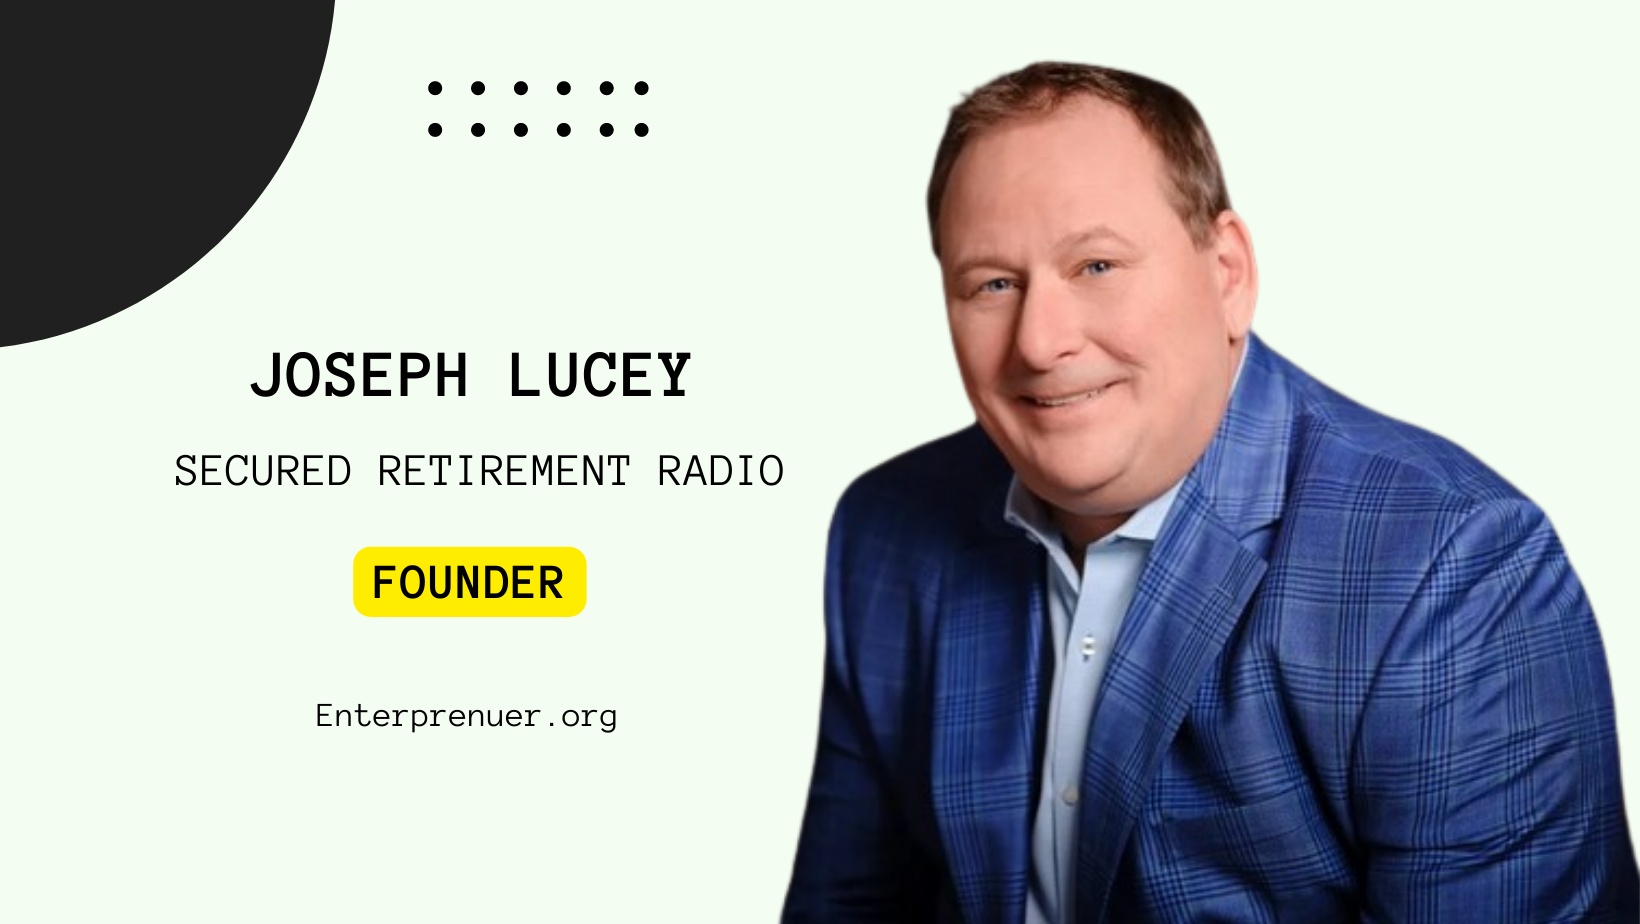 Joseph Lucey Founder of Secured Retirement Radio